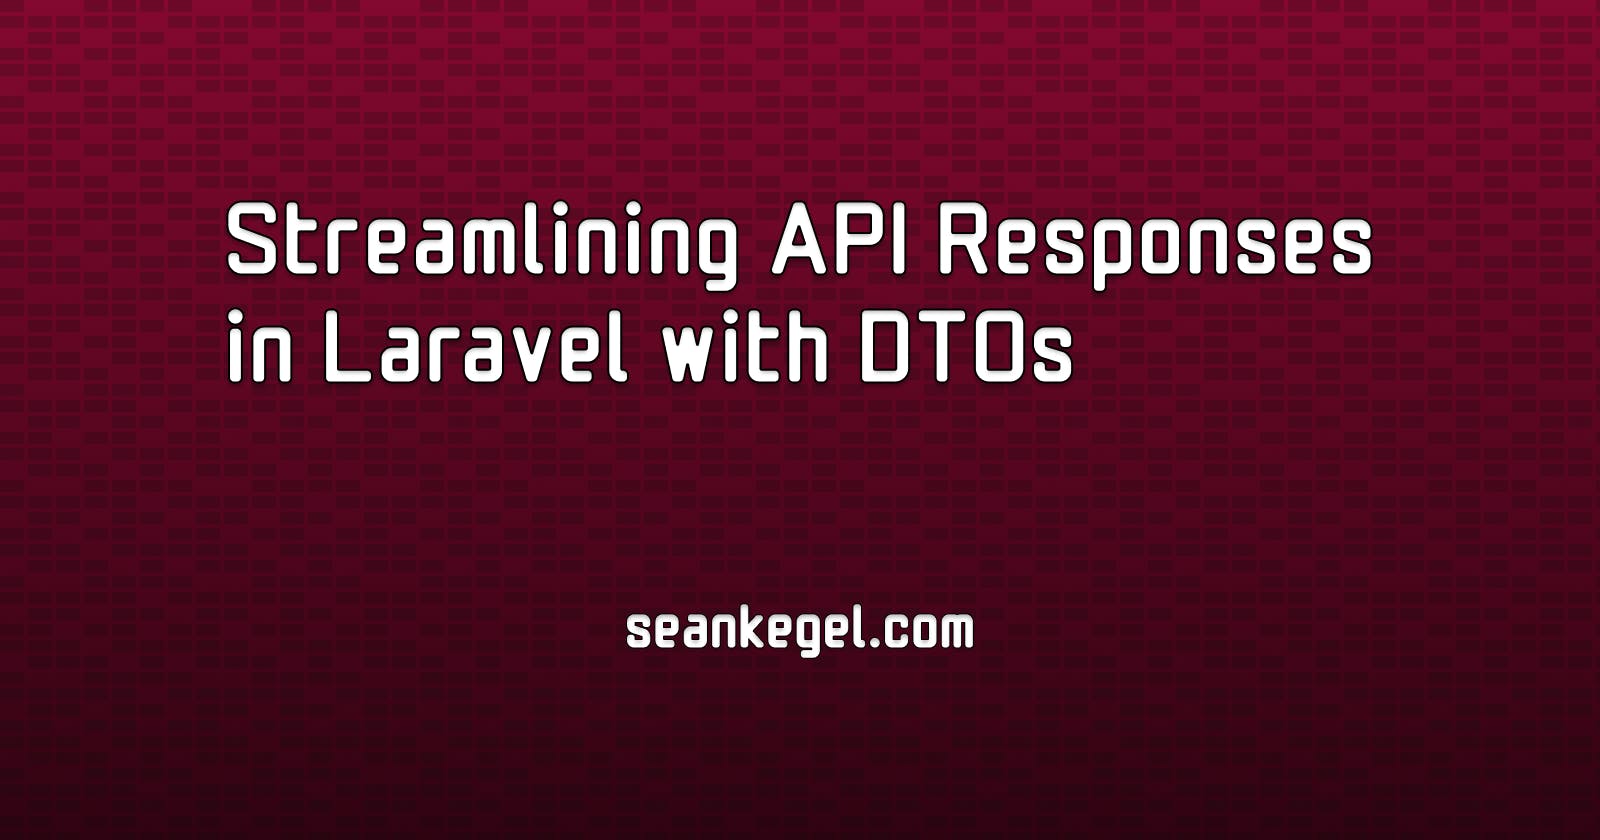 Streamlining API Responses in Laravel with DTOs